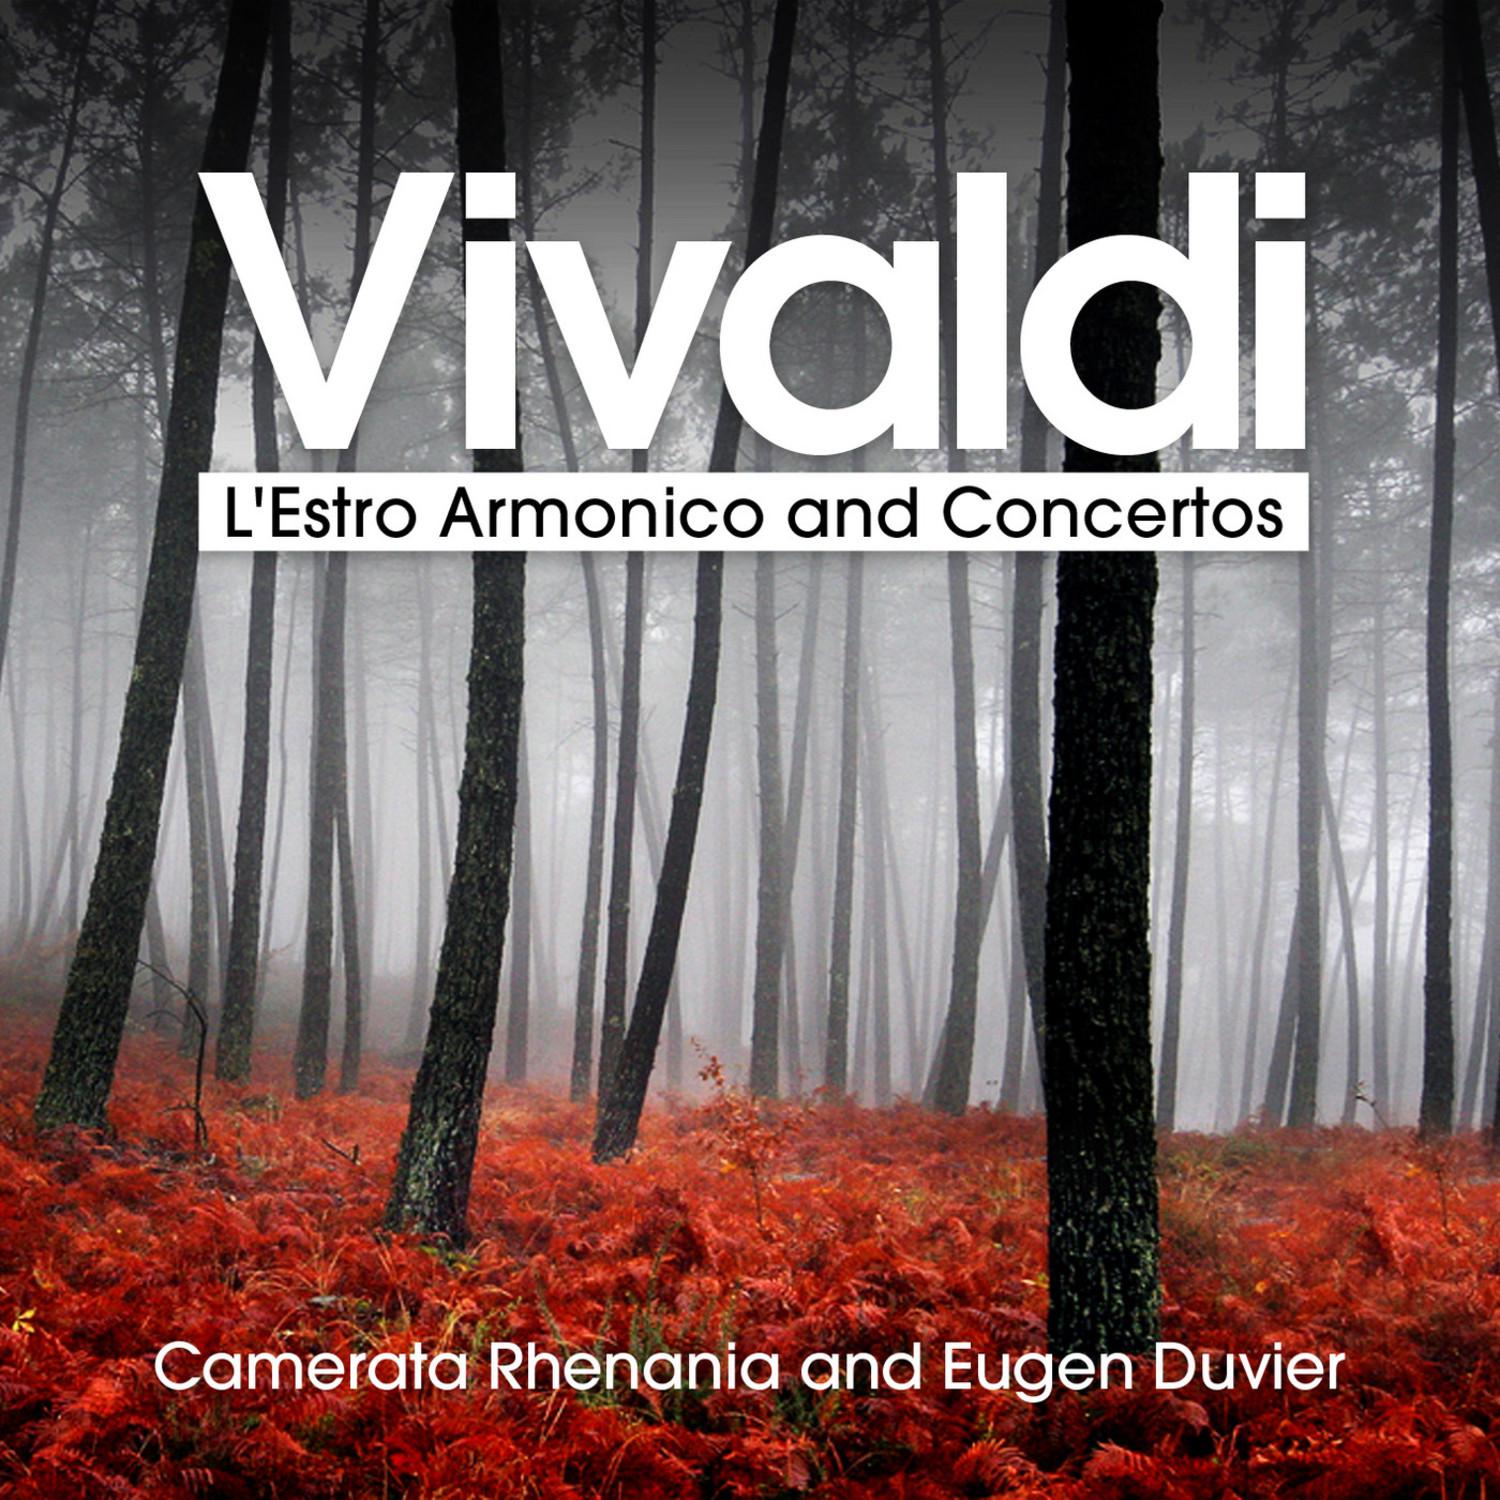 L'Estro Armonico, Op. 3 - Concerto No. 7 in F Major for 4 Violins, Cello and Strings, RV 567: II. Adagio